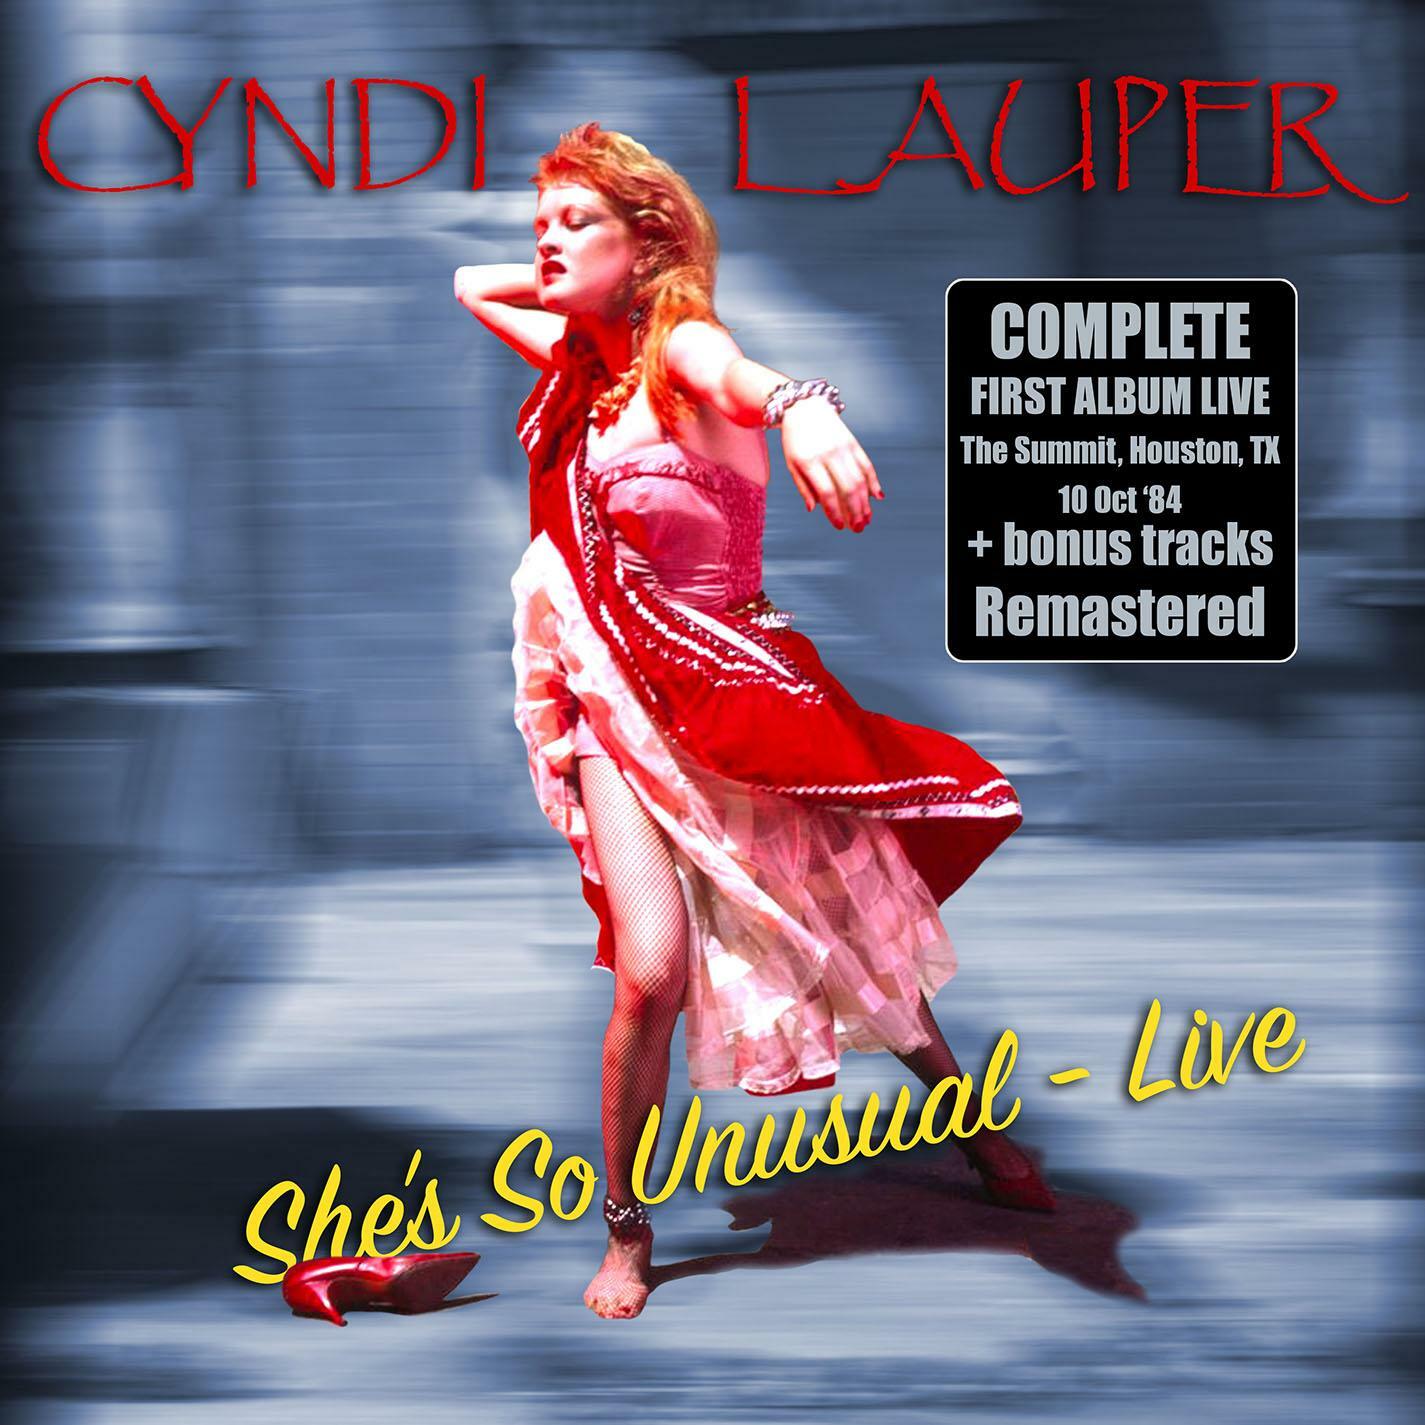 Cyndi Lauper Shes So Unusual Live And Remastered Bonus Tracks Live The Summit Houston 